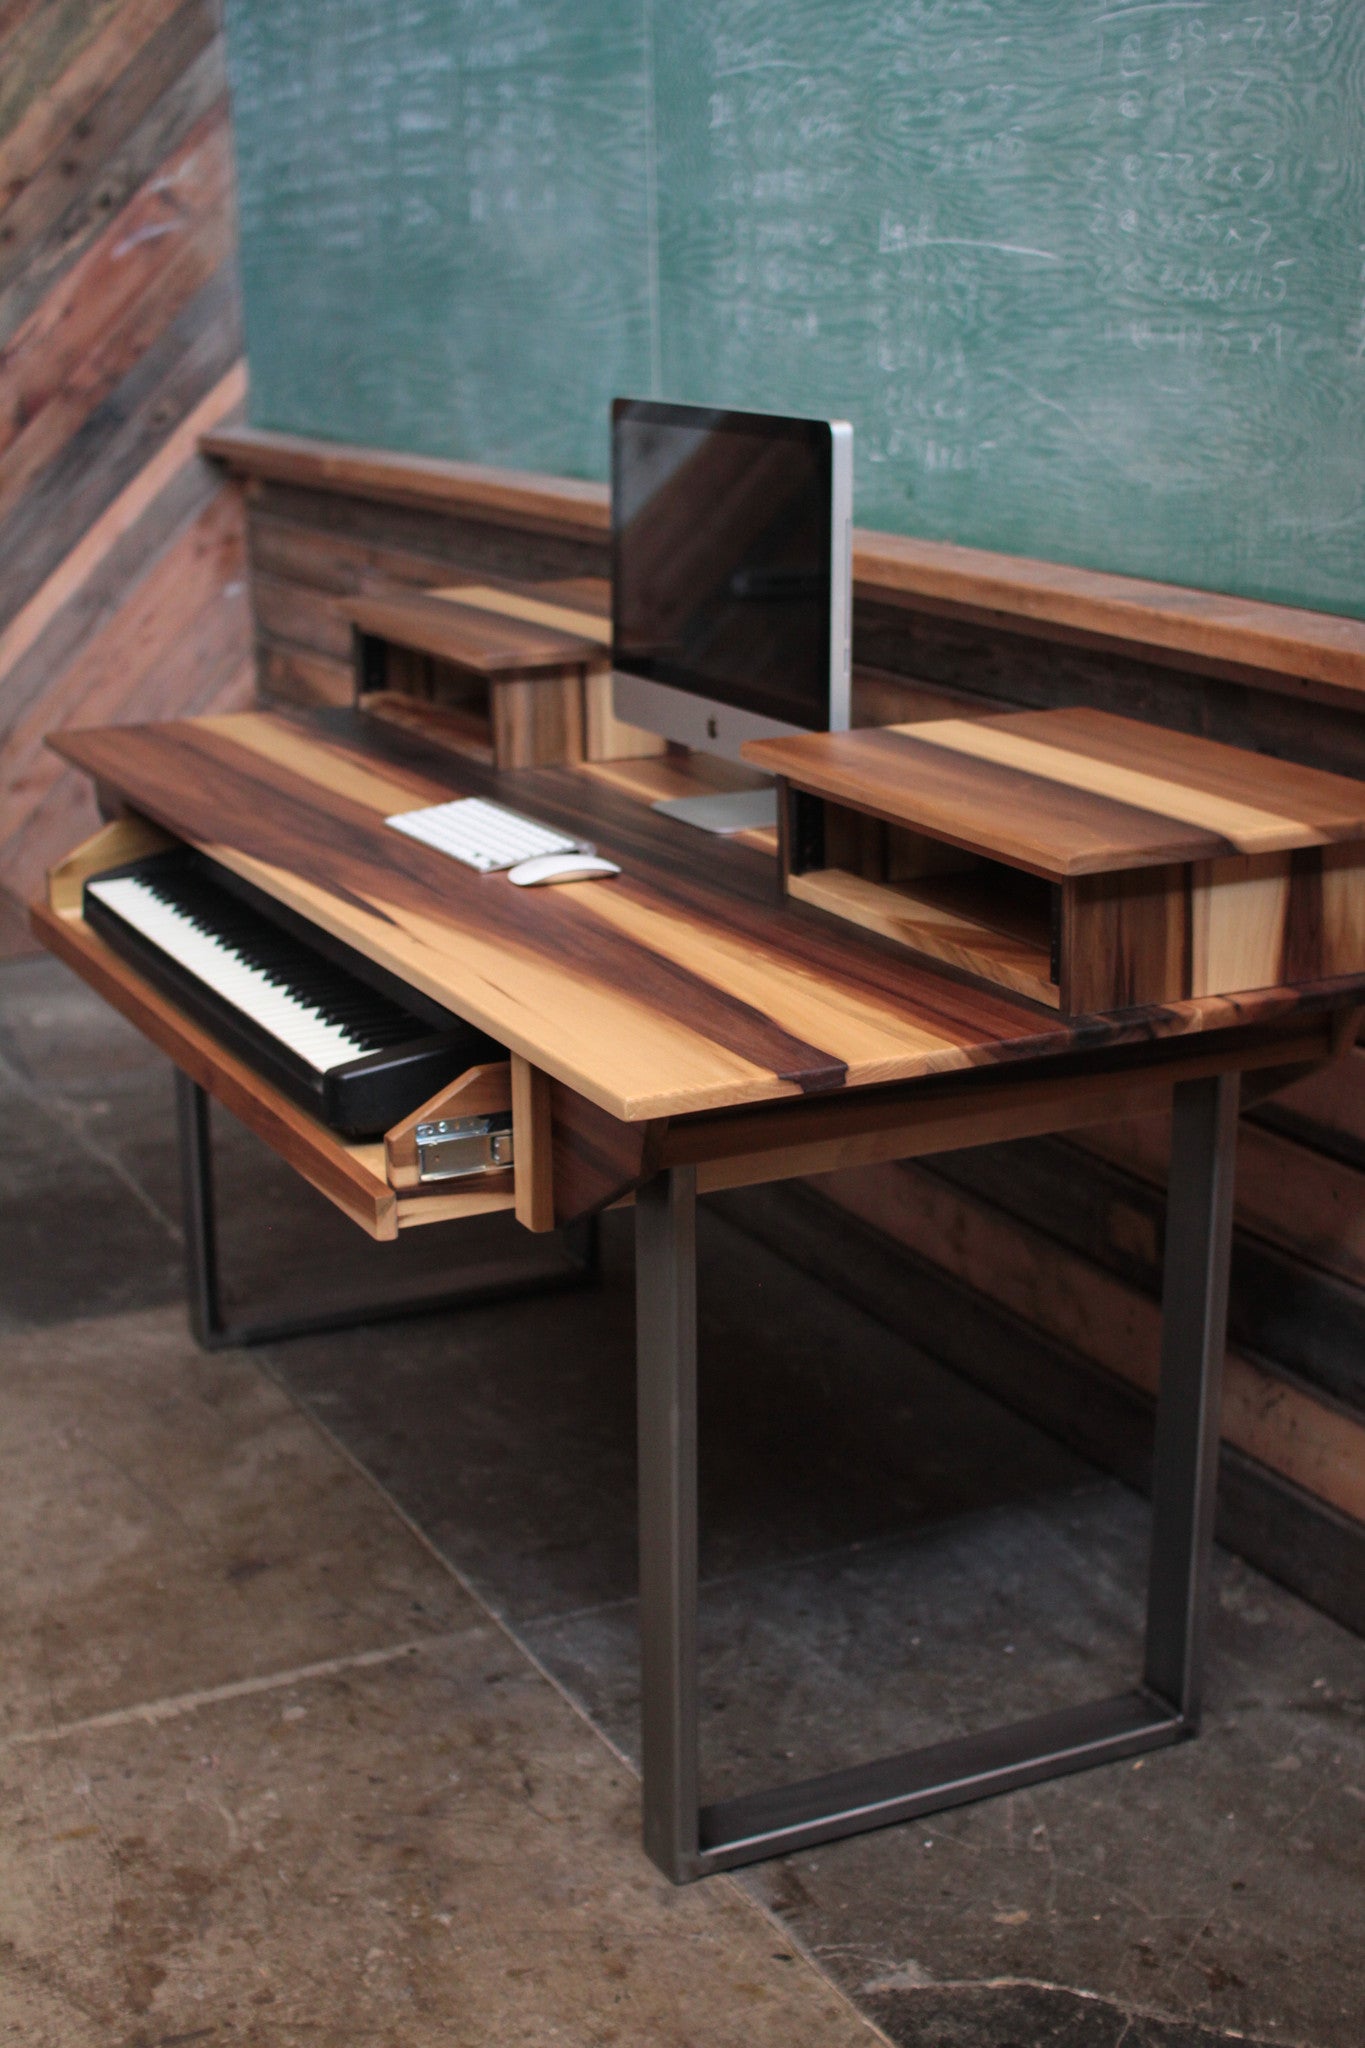 Monkwood SD61 Studio Desk for Audio / Video / Music / Film / Production